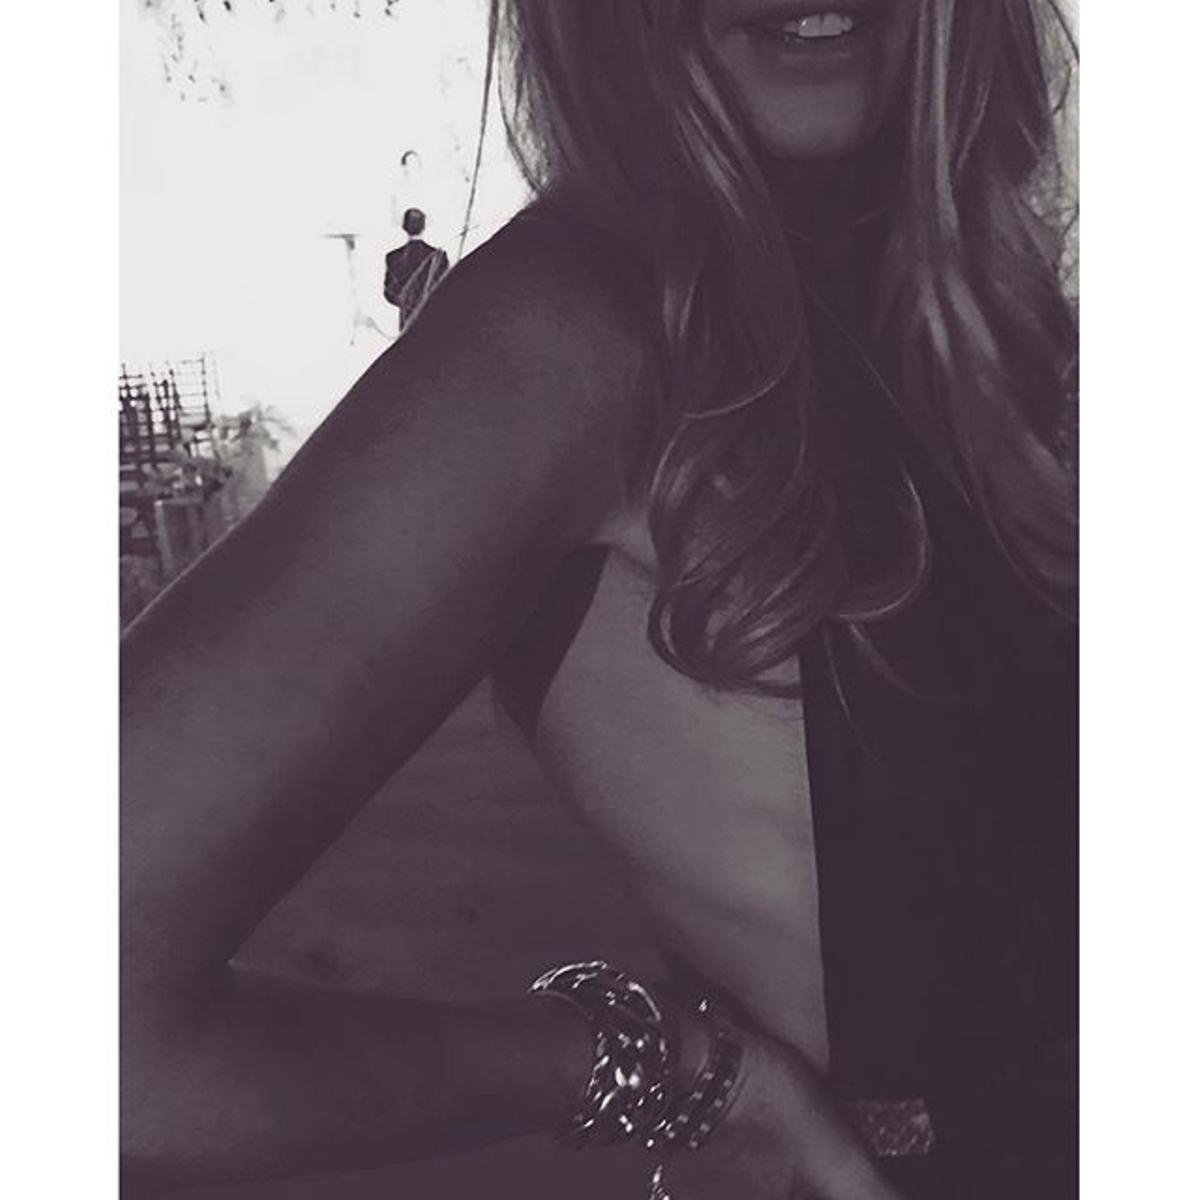 Elle Macpershon en el Instagram de Kim Kardashian